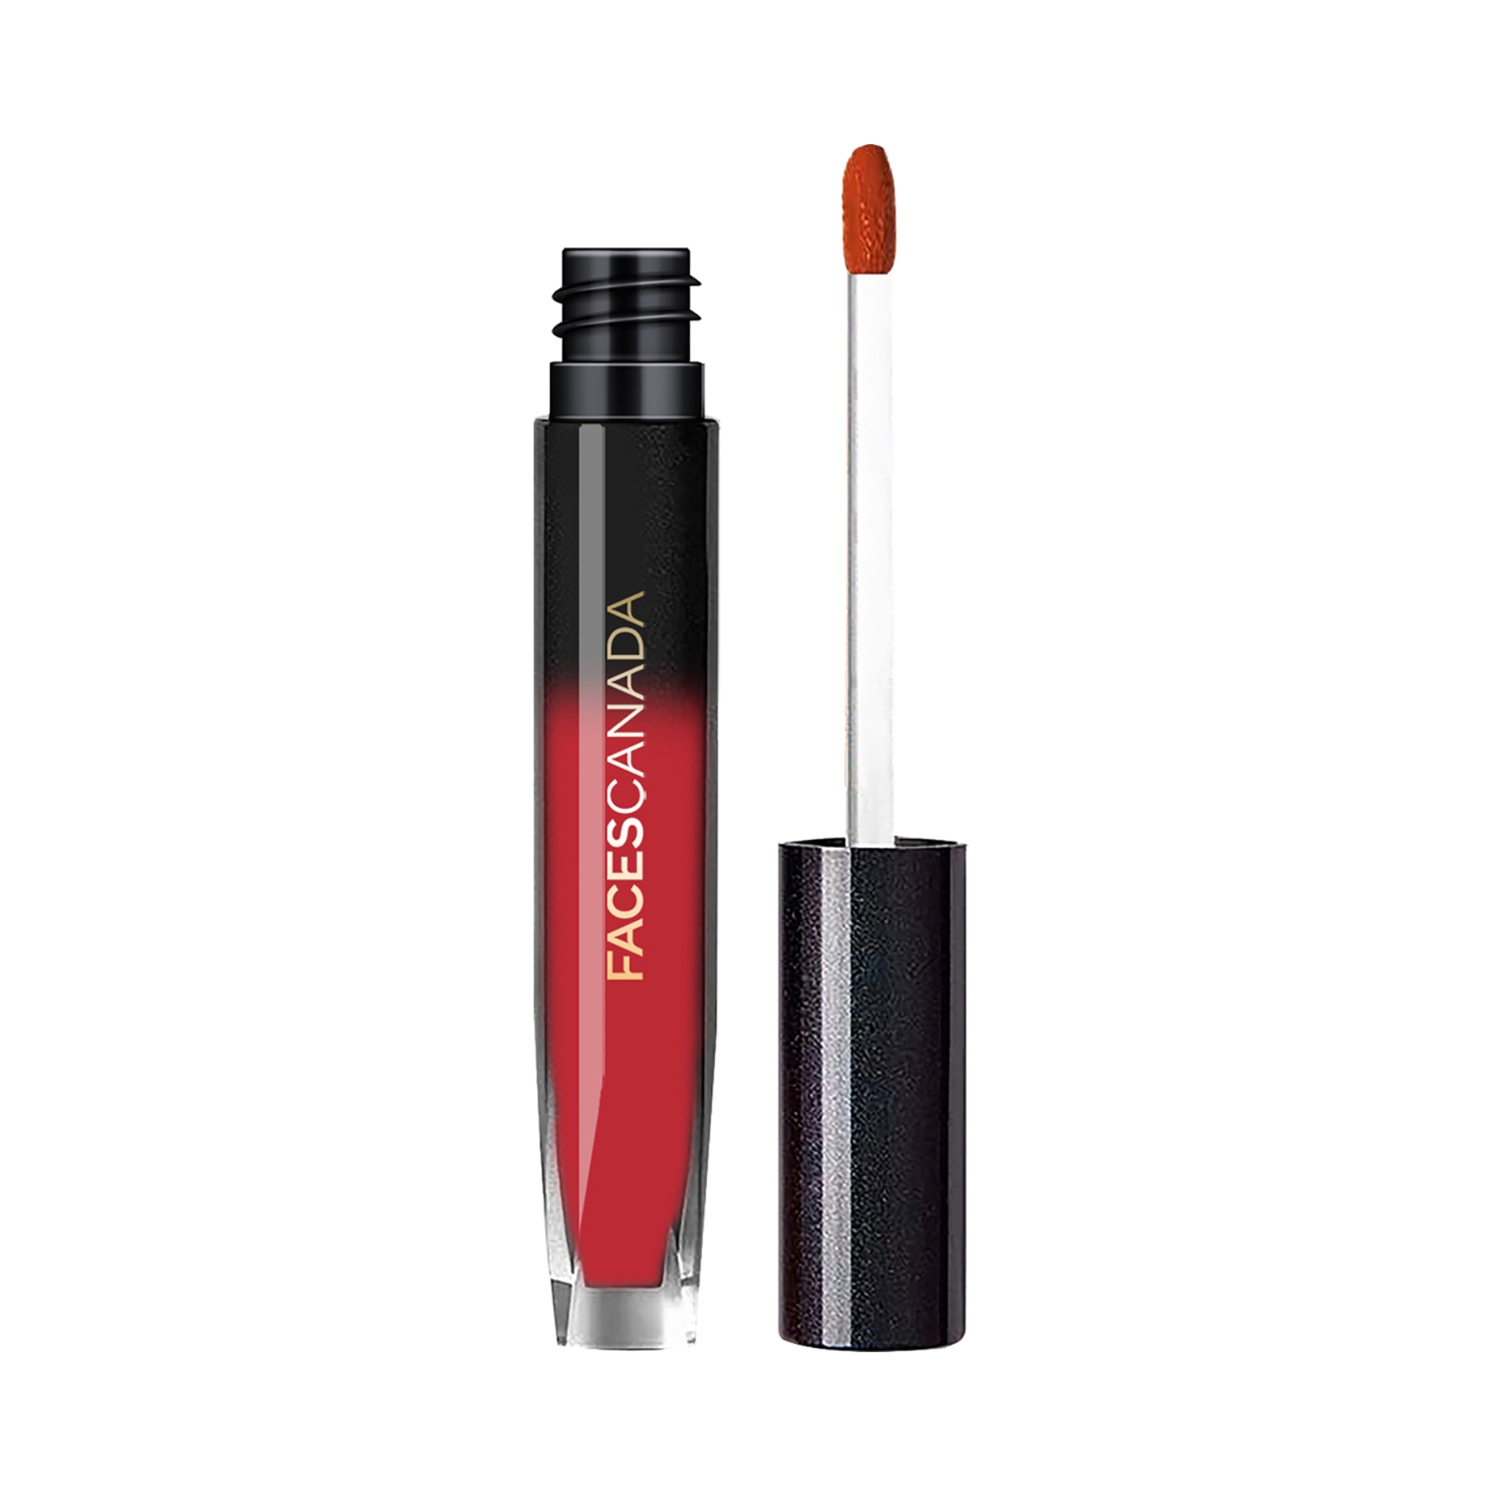 Faces Canada | Faces Canada Comfy Silk Liquid Lipstick - 10 Zealous Red (4ml)